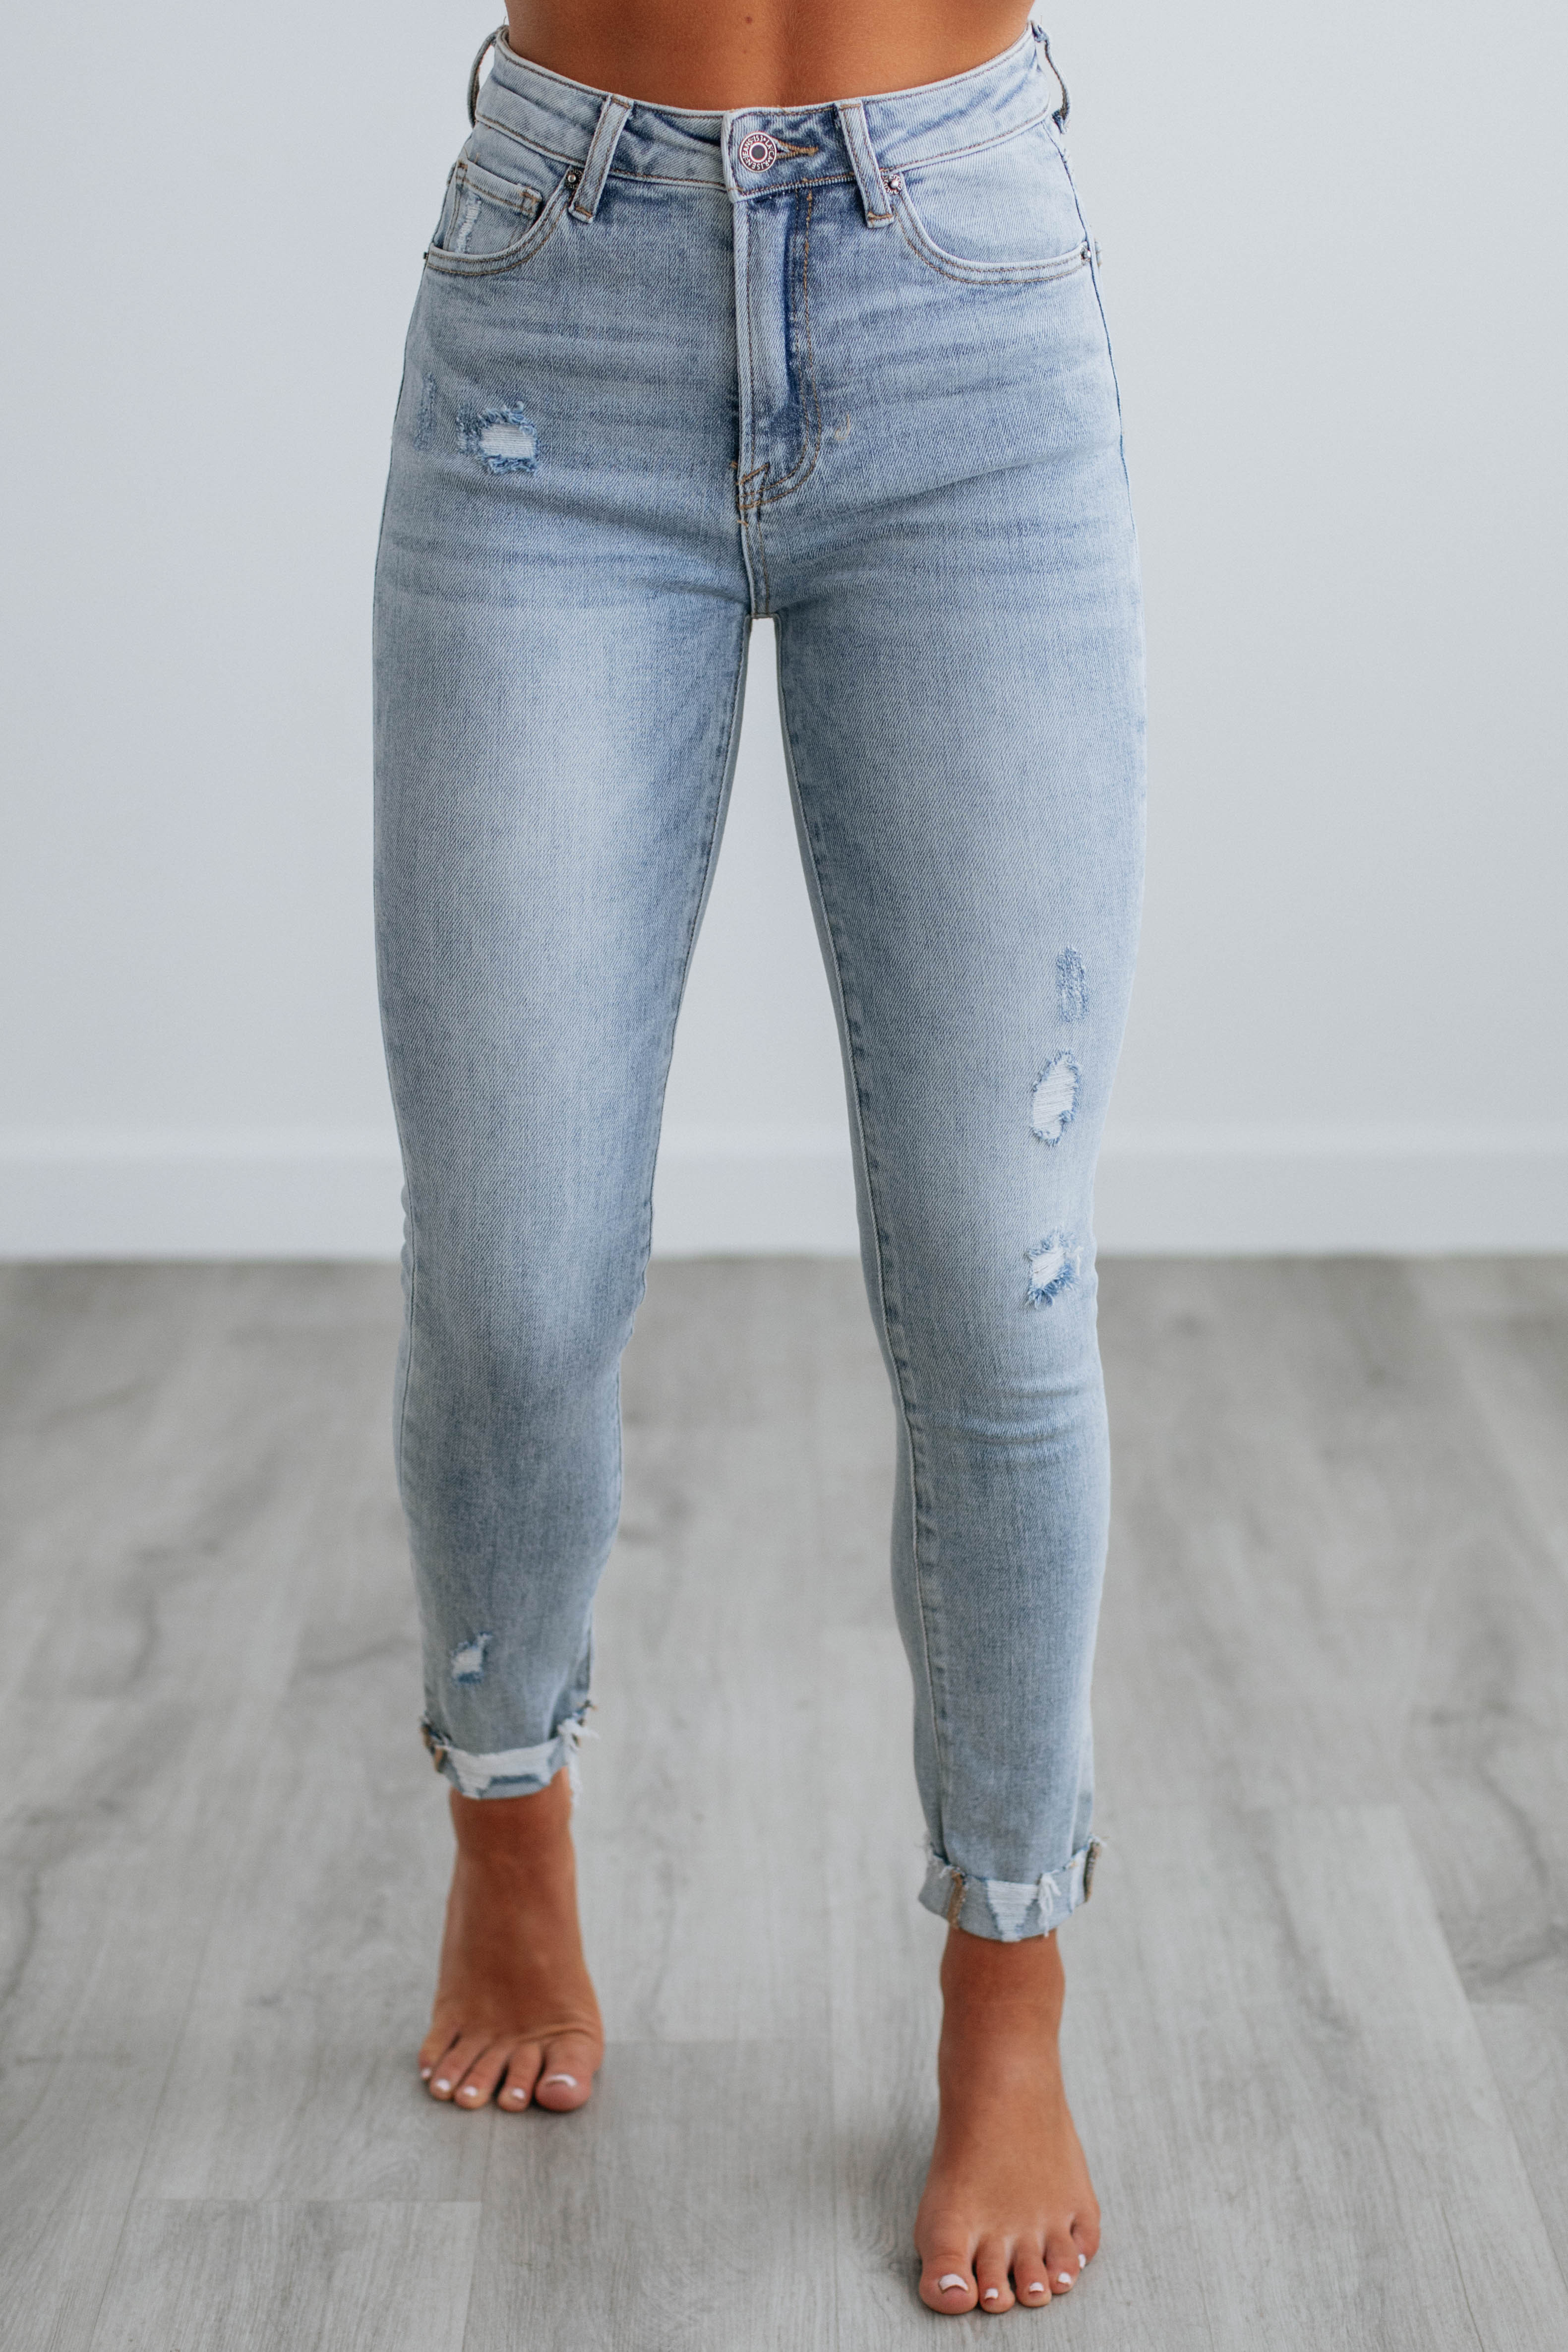 Jenna Risen Jeans | Wild Oak Boutique